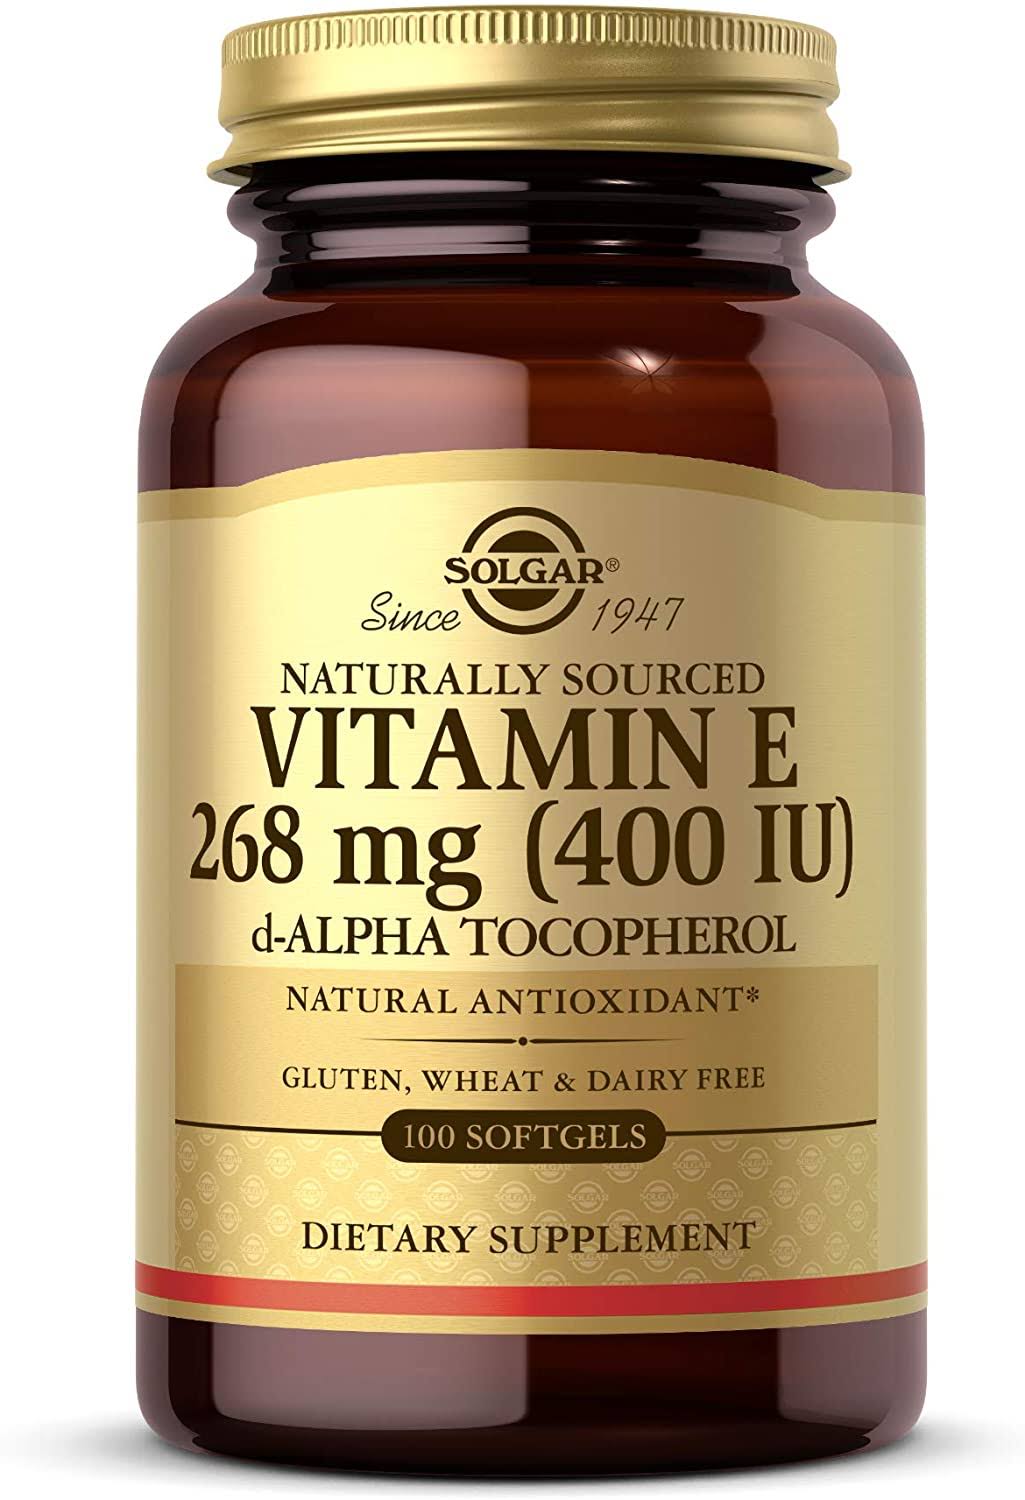 Solgar Vitamin E 400 IU Dietary Supplement - 100 Softgels